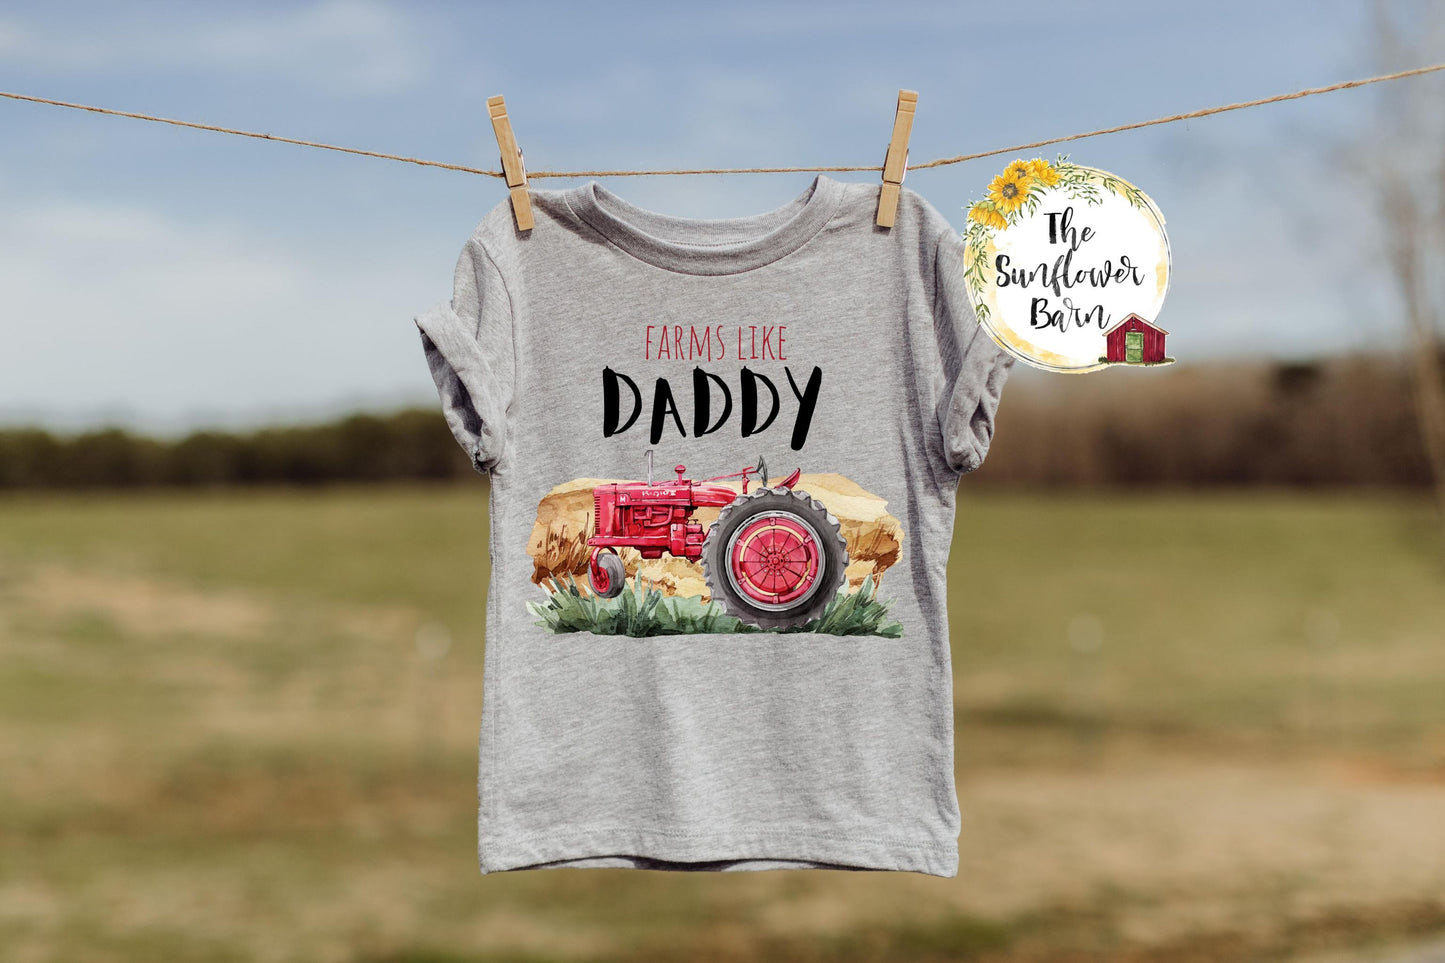 Farms like Daddy